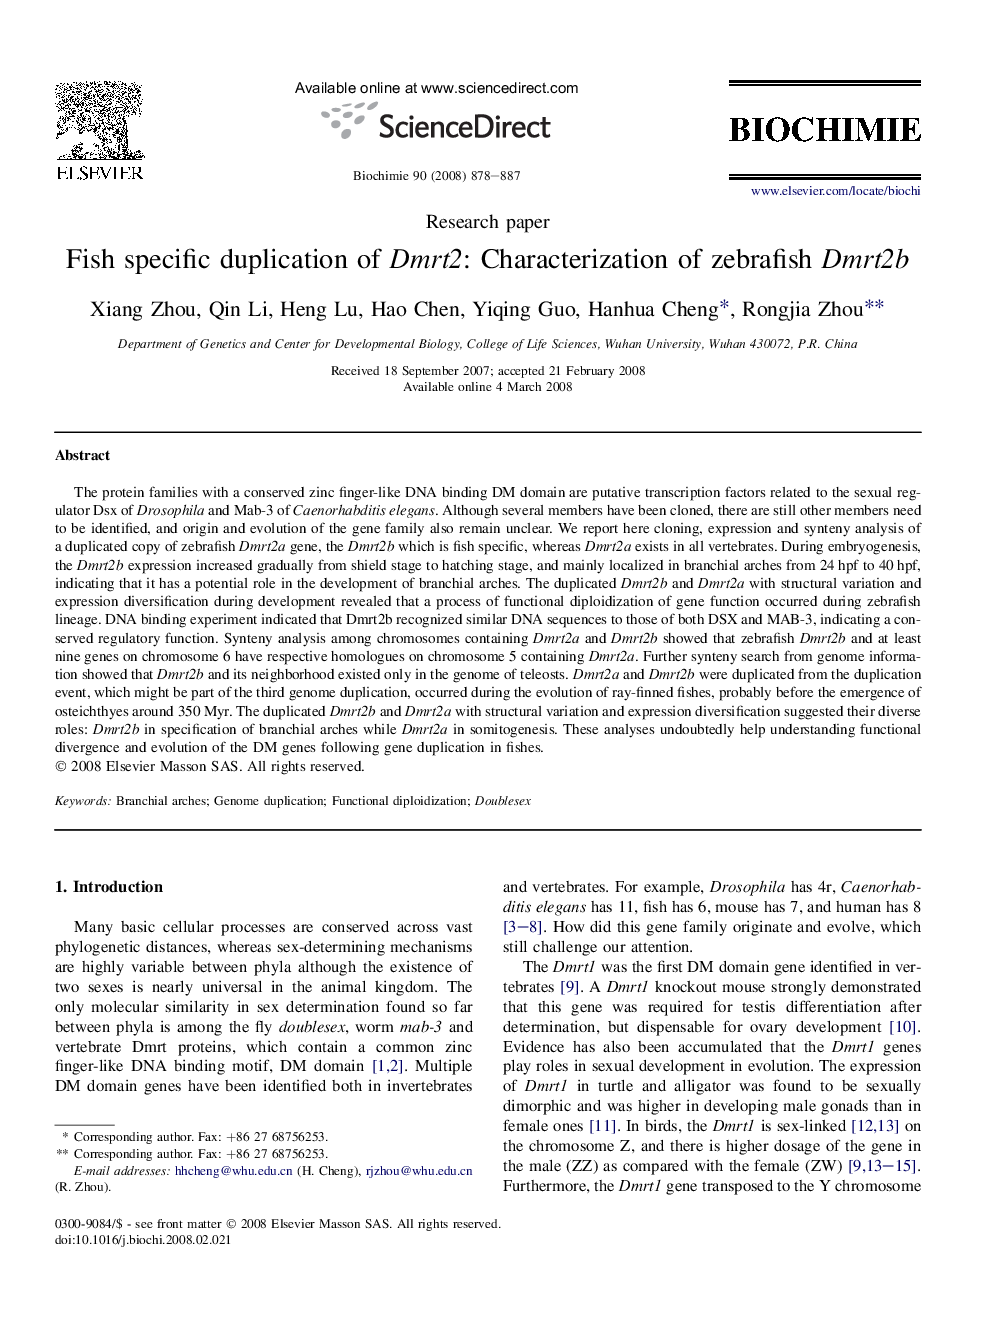 Fish specific duplication of Dmrt2: Characterization of zebrafish Dmrt2b